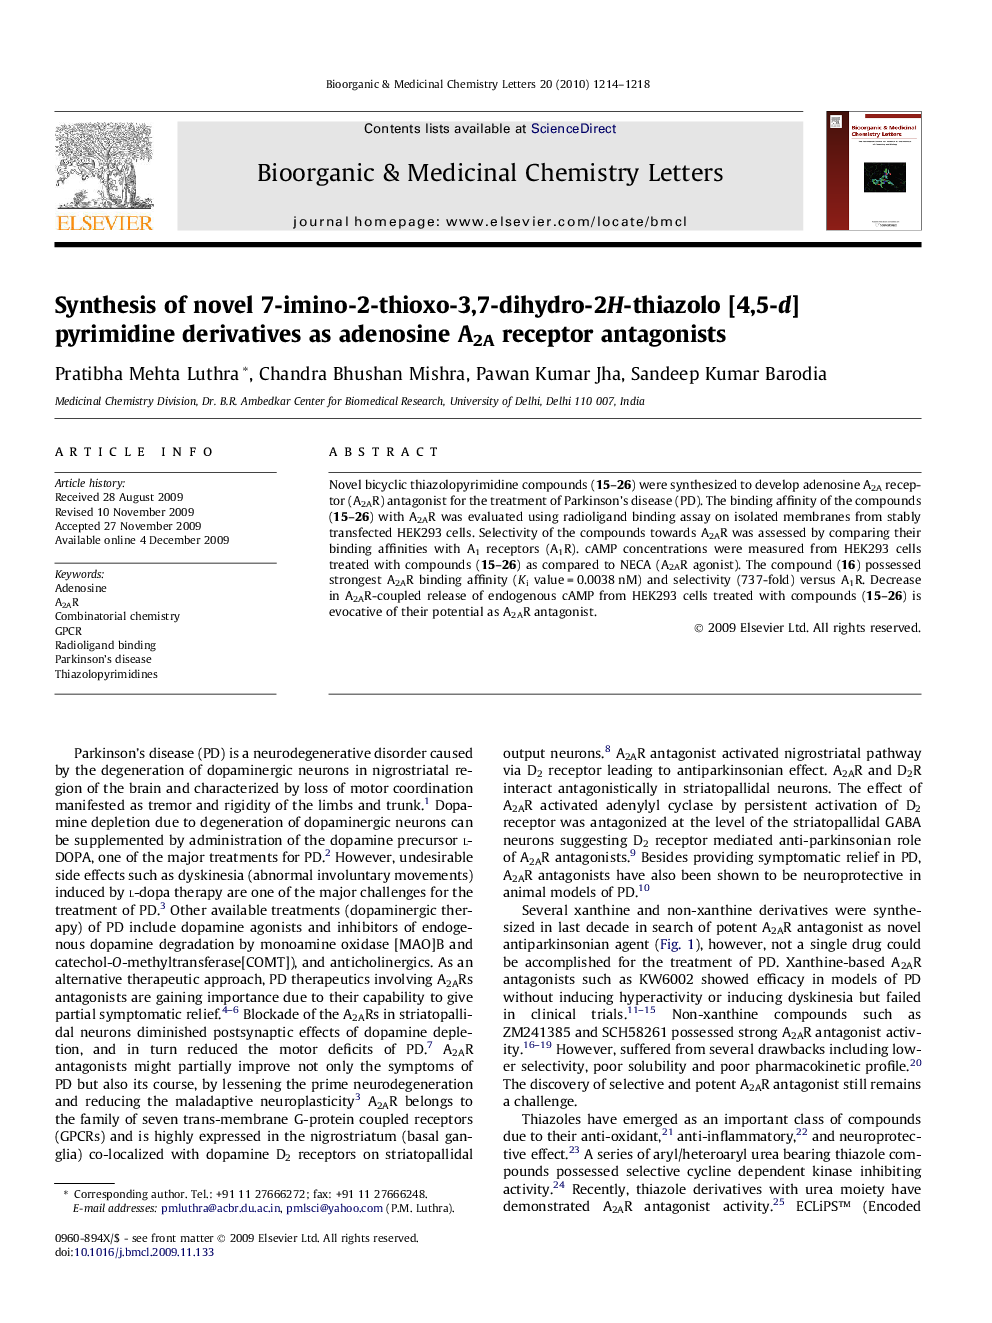 Synthesis of novel 7-imino-2-thioxo-3,7-dihydro-2H-thiazolo [4,5-d] pyrimidine derivatives as adenosine A2A receptor antagonists